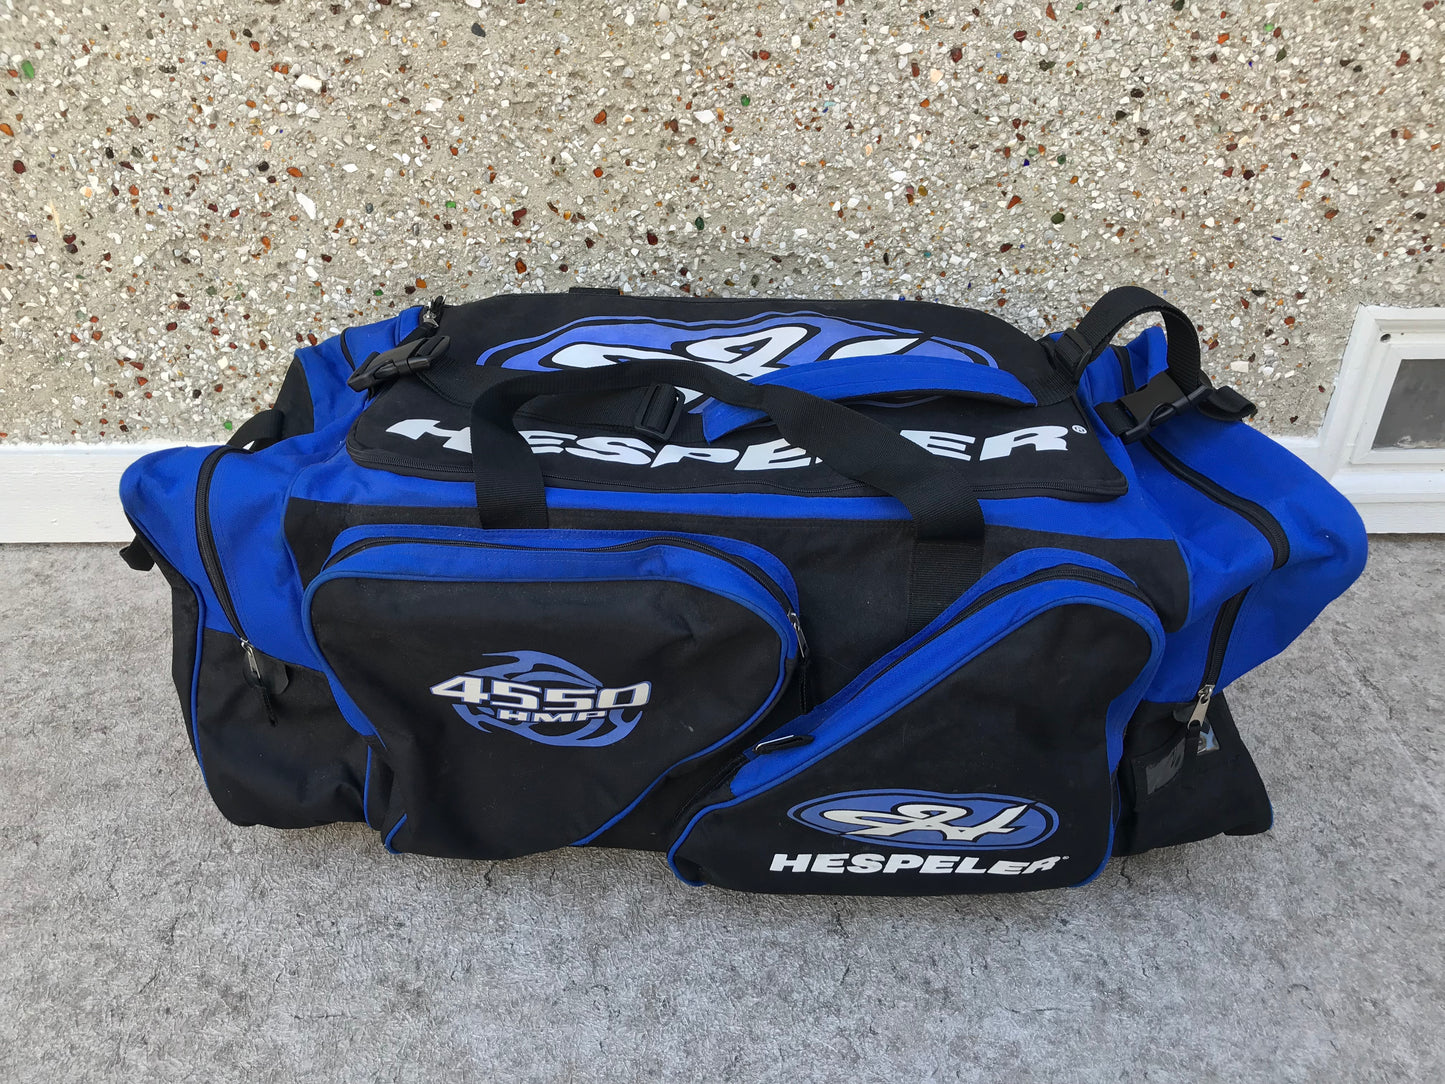 Hockey Bag Men's Senior Large Hespeler Bag Excellent Condition All Zippers Perfect Blue Black